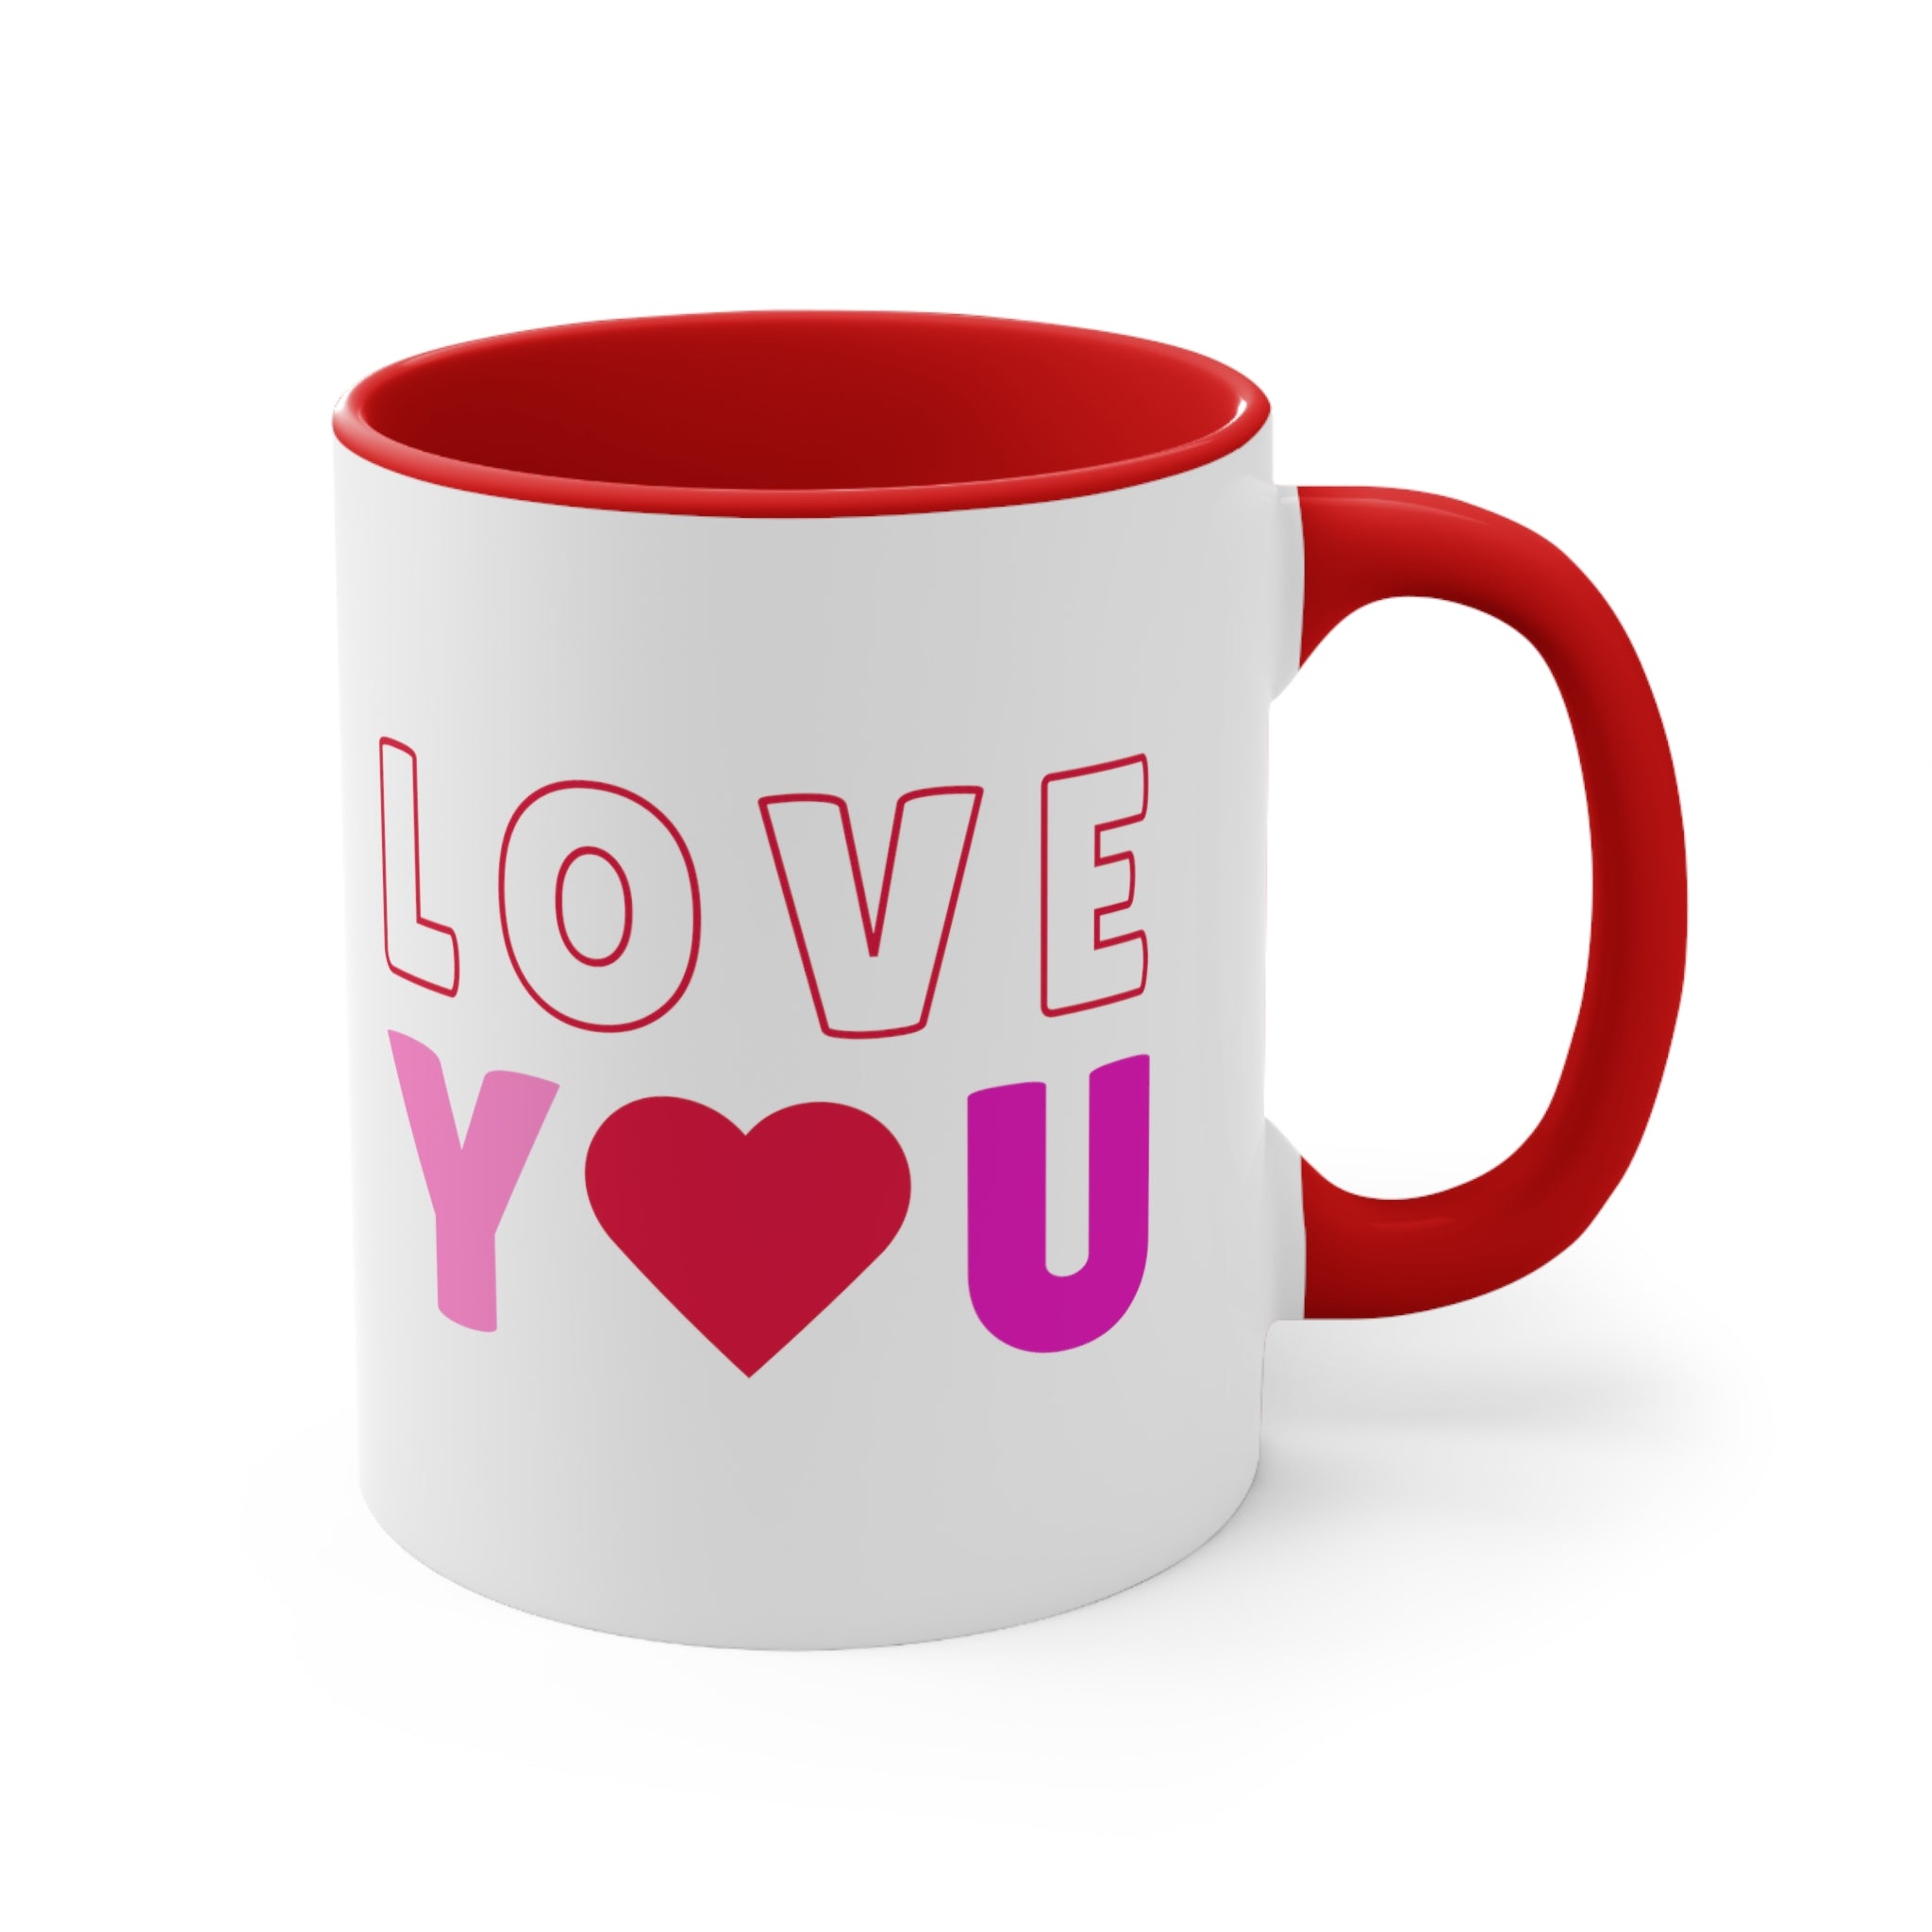 LOVE YOU by Awayday Ceramic Mug